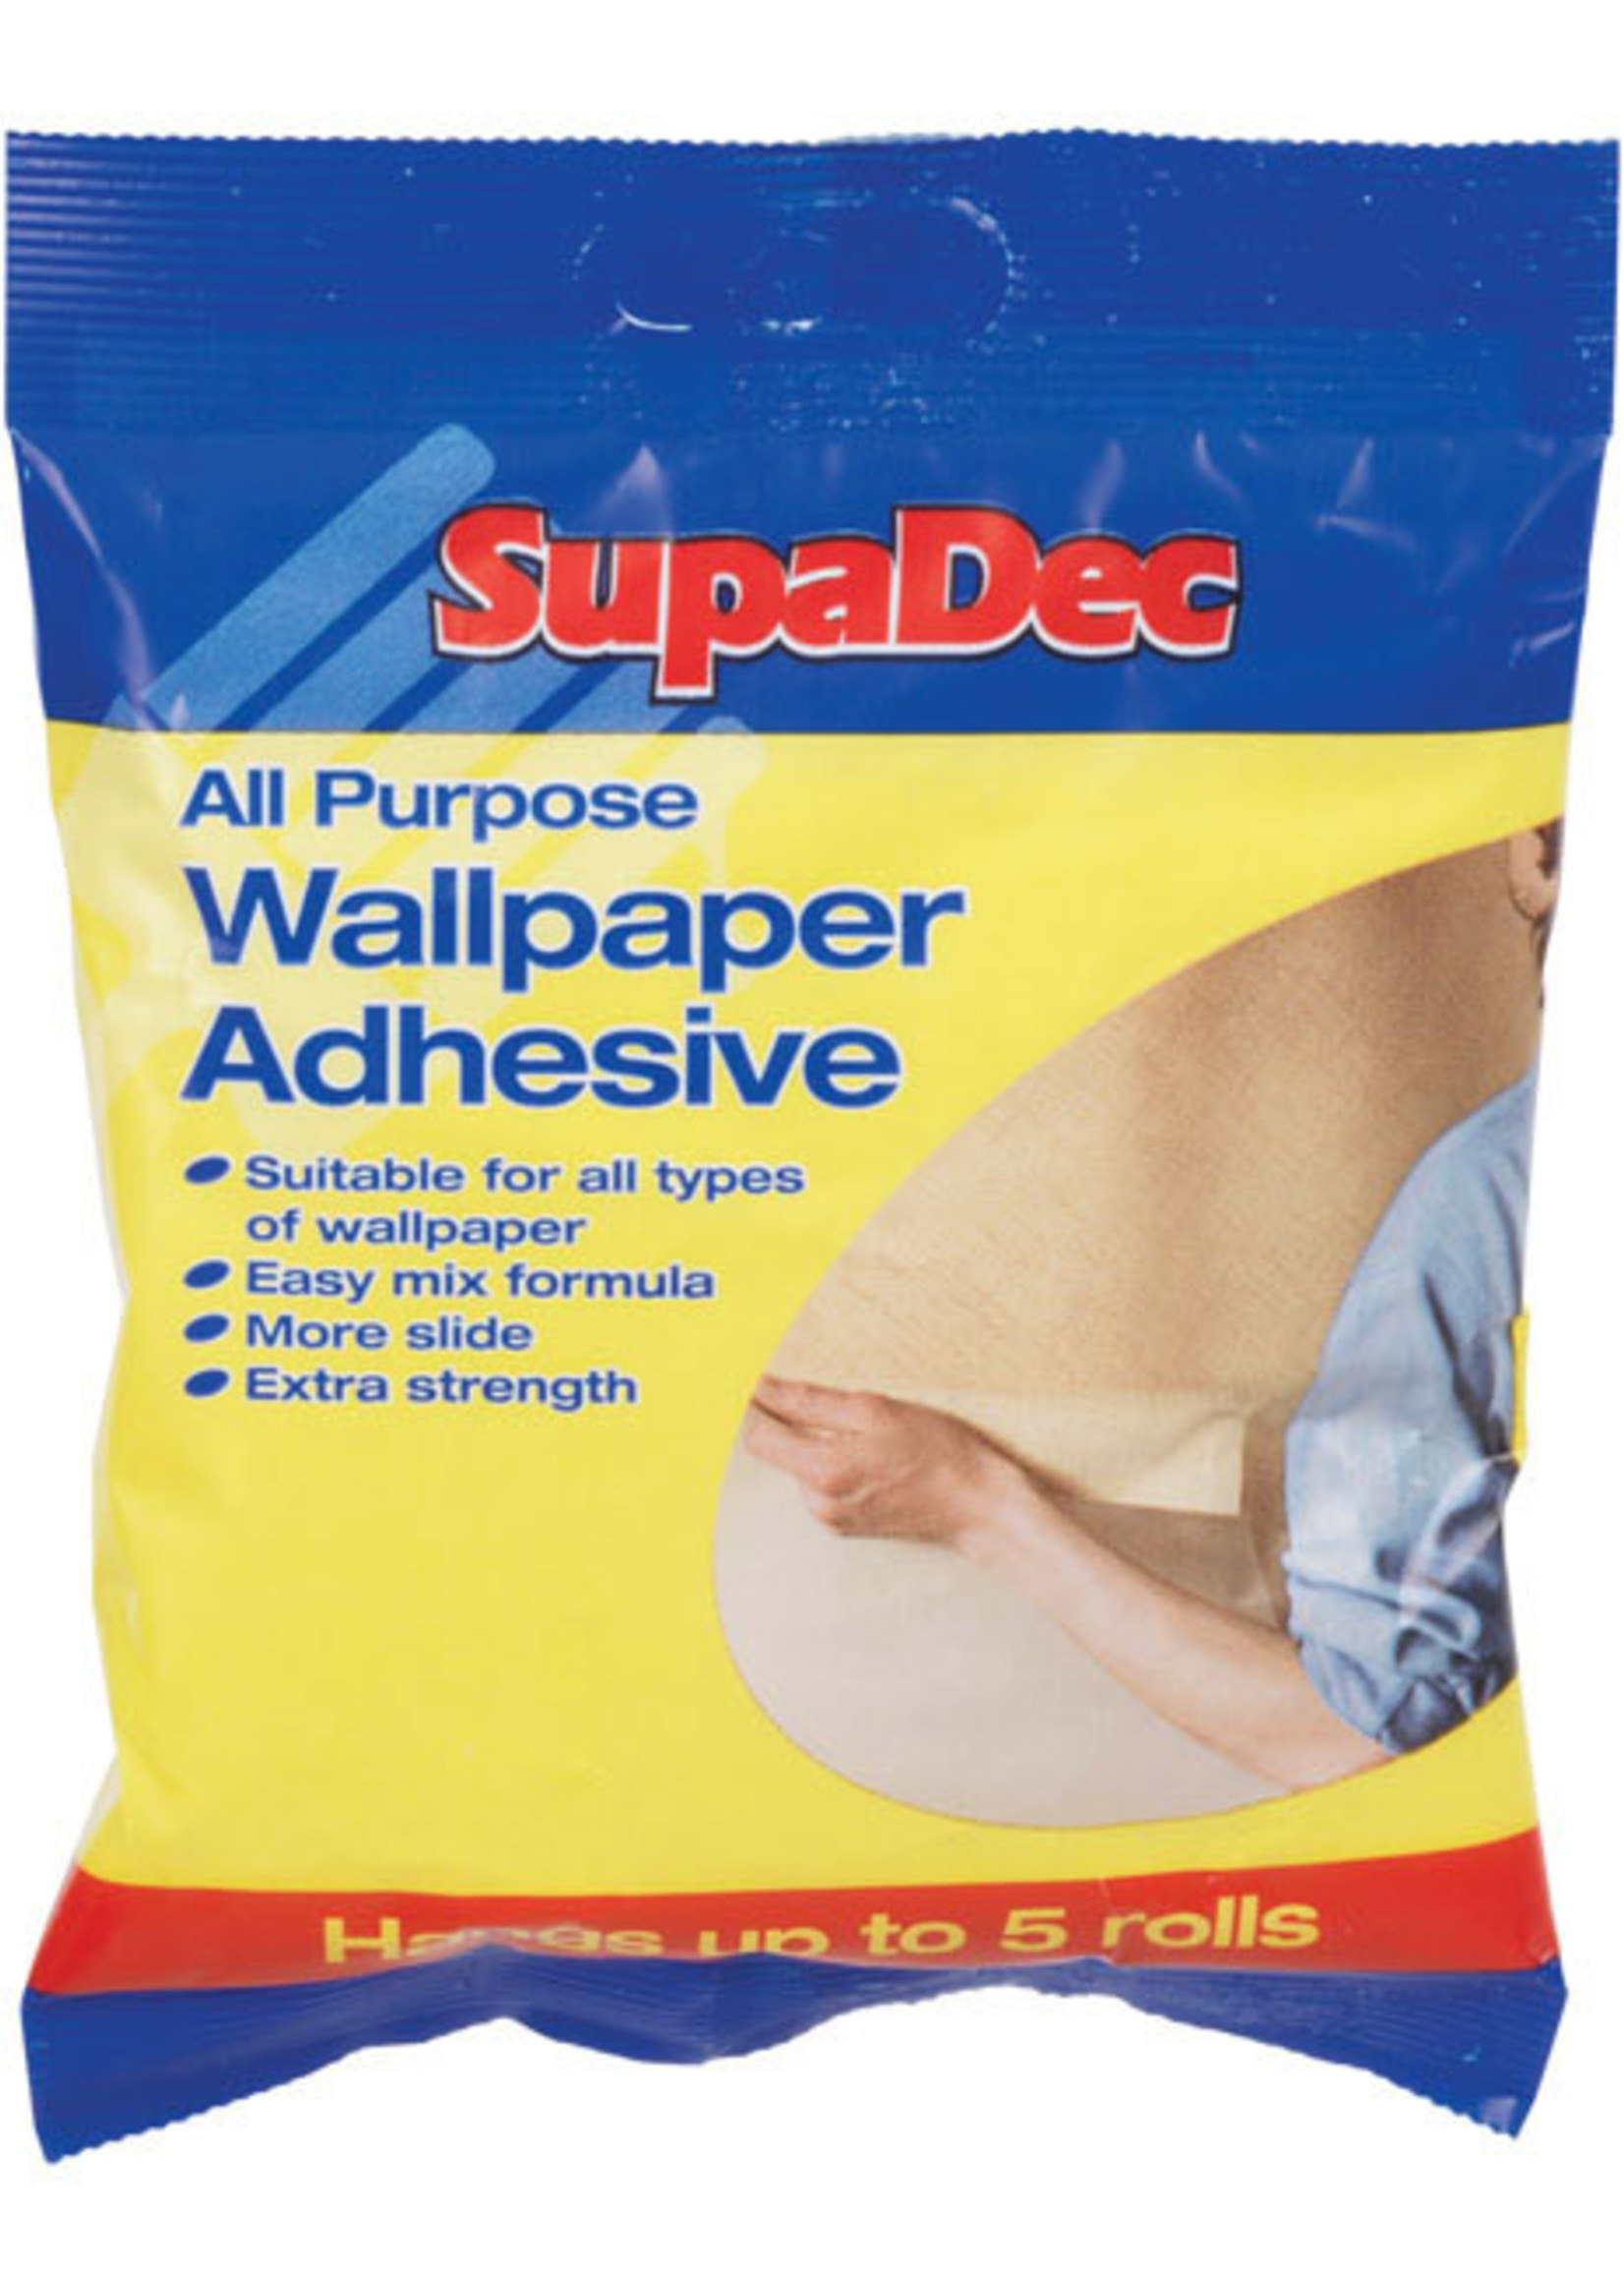 SupaDec SupaDec All Purpose Wallpaper Adhesive up to 5 Rolls